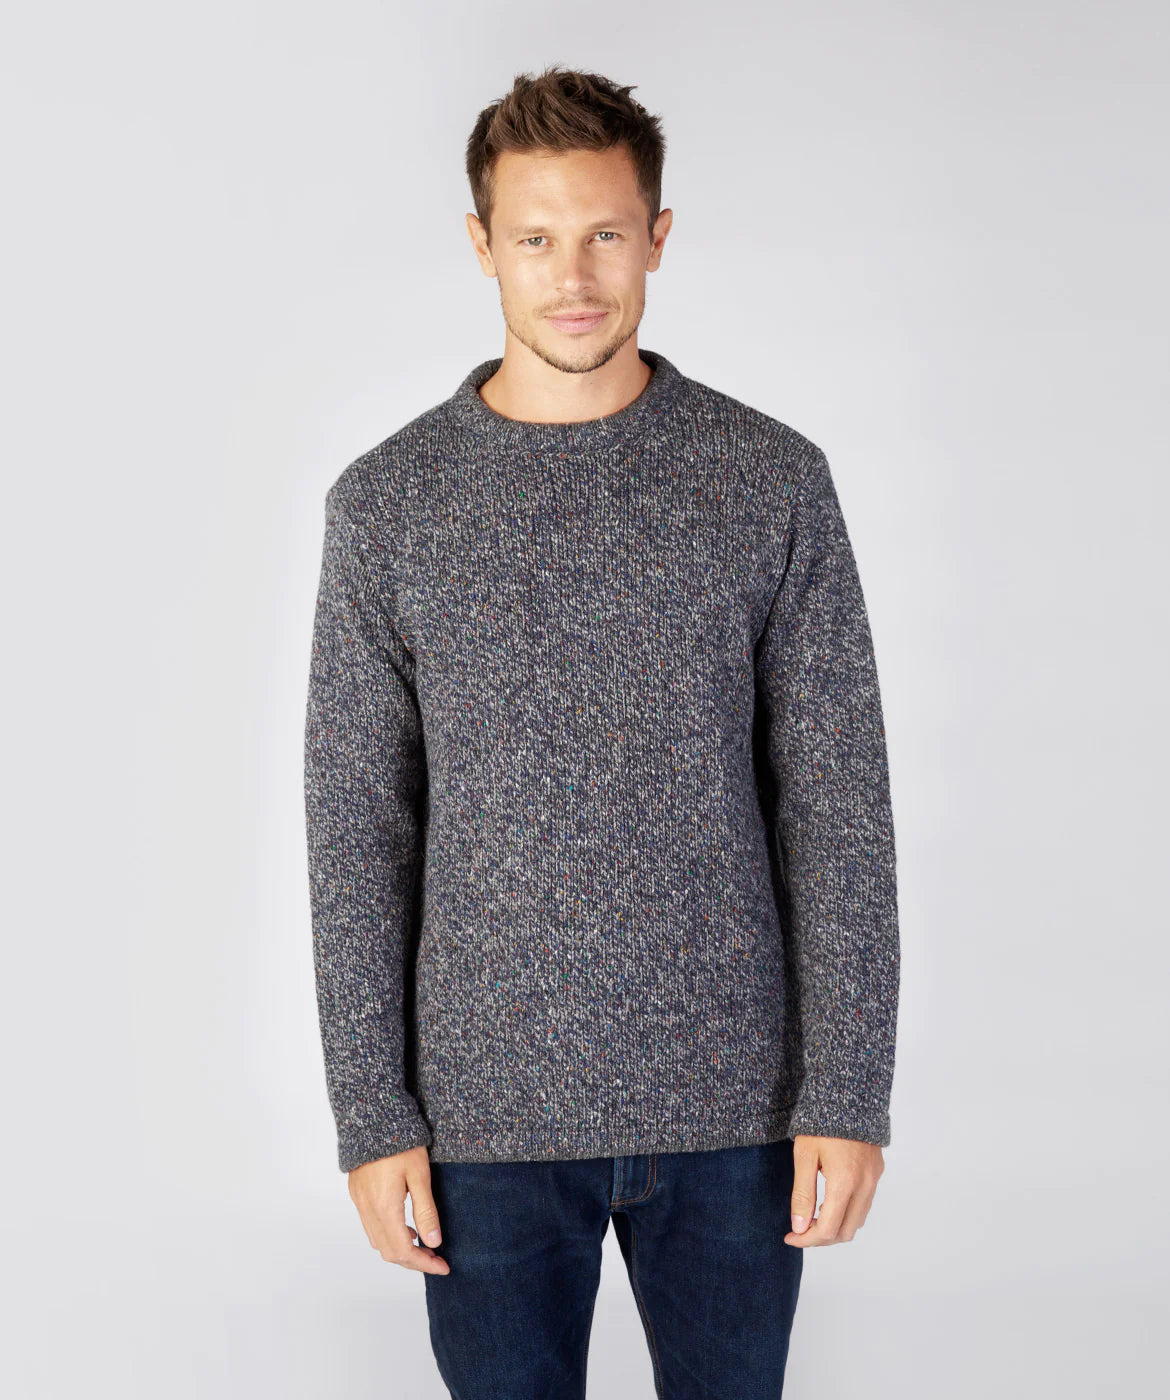 Roundstone Sweater - Navy Marl